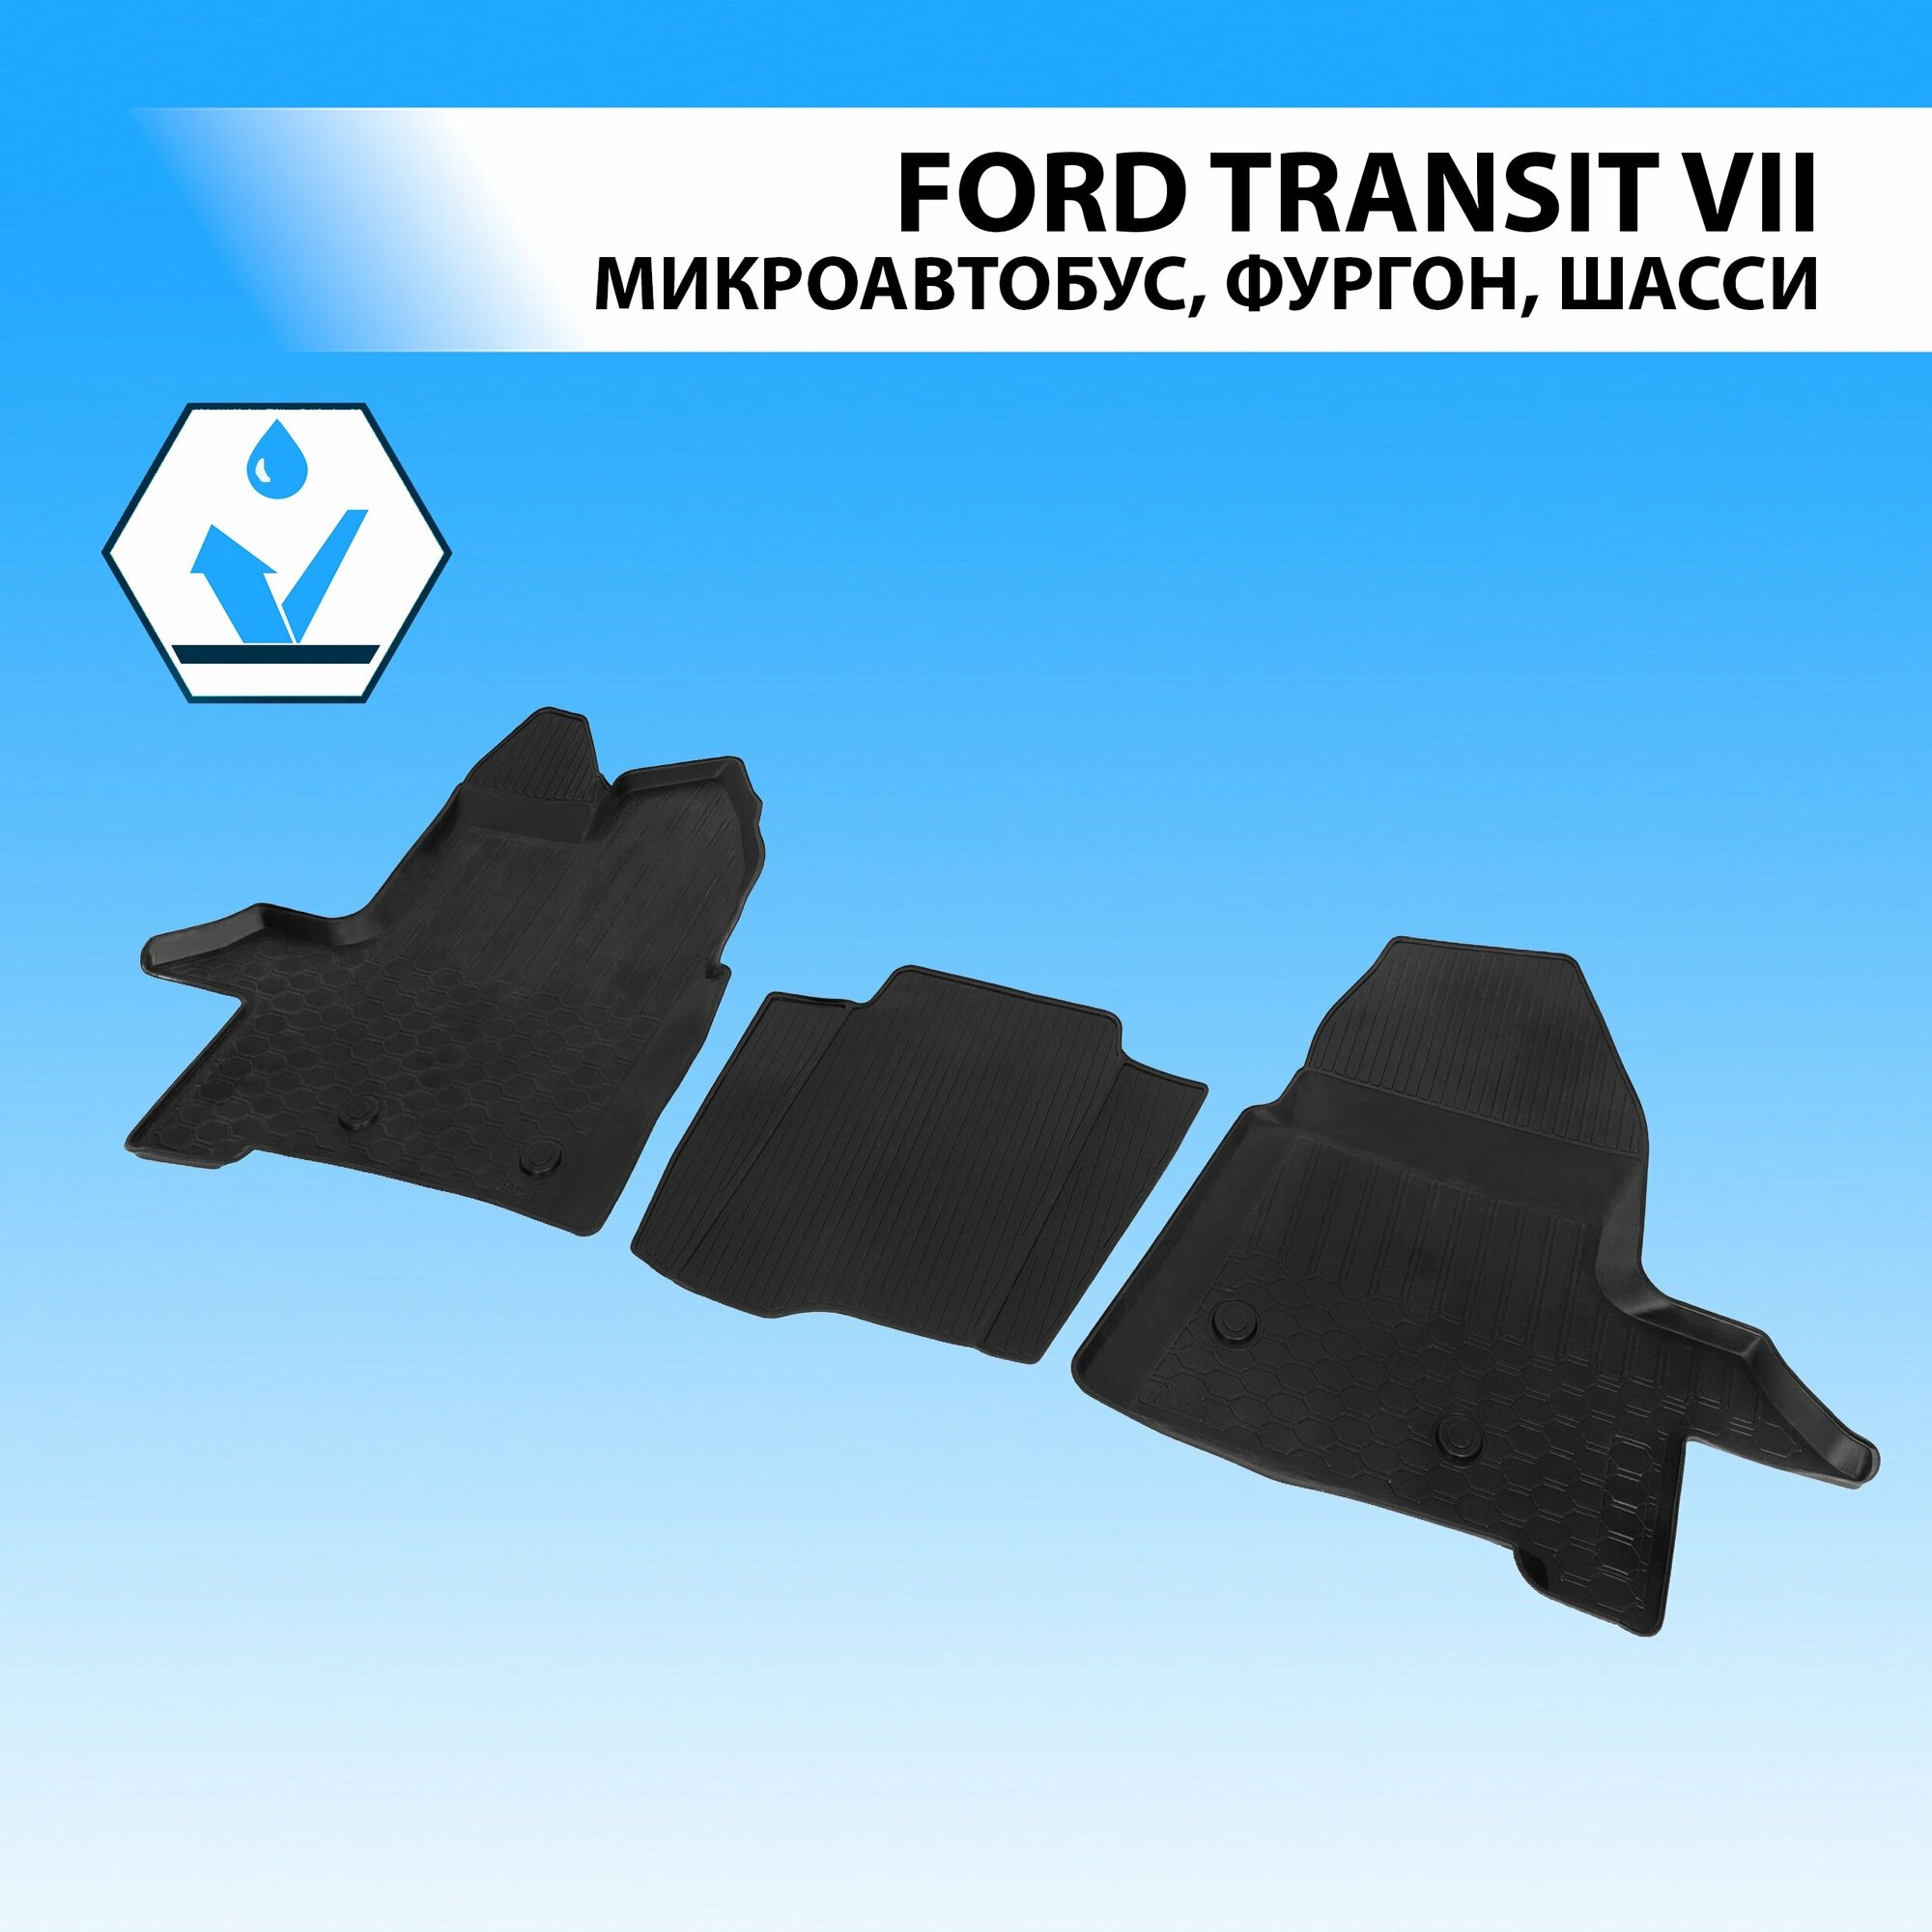 Коврики в салон автомобиля передние Rival для Ford Transit VII микроавтобус, фургон, шасси 2014-н. в, полиуретан, с крепежом, 3 шт, 11806001